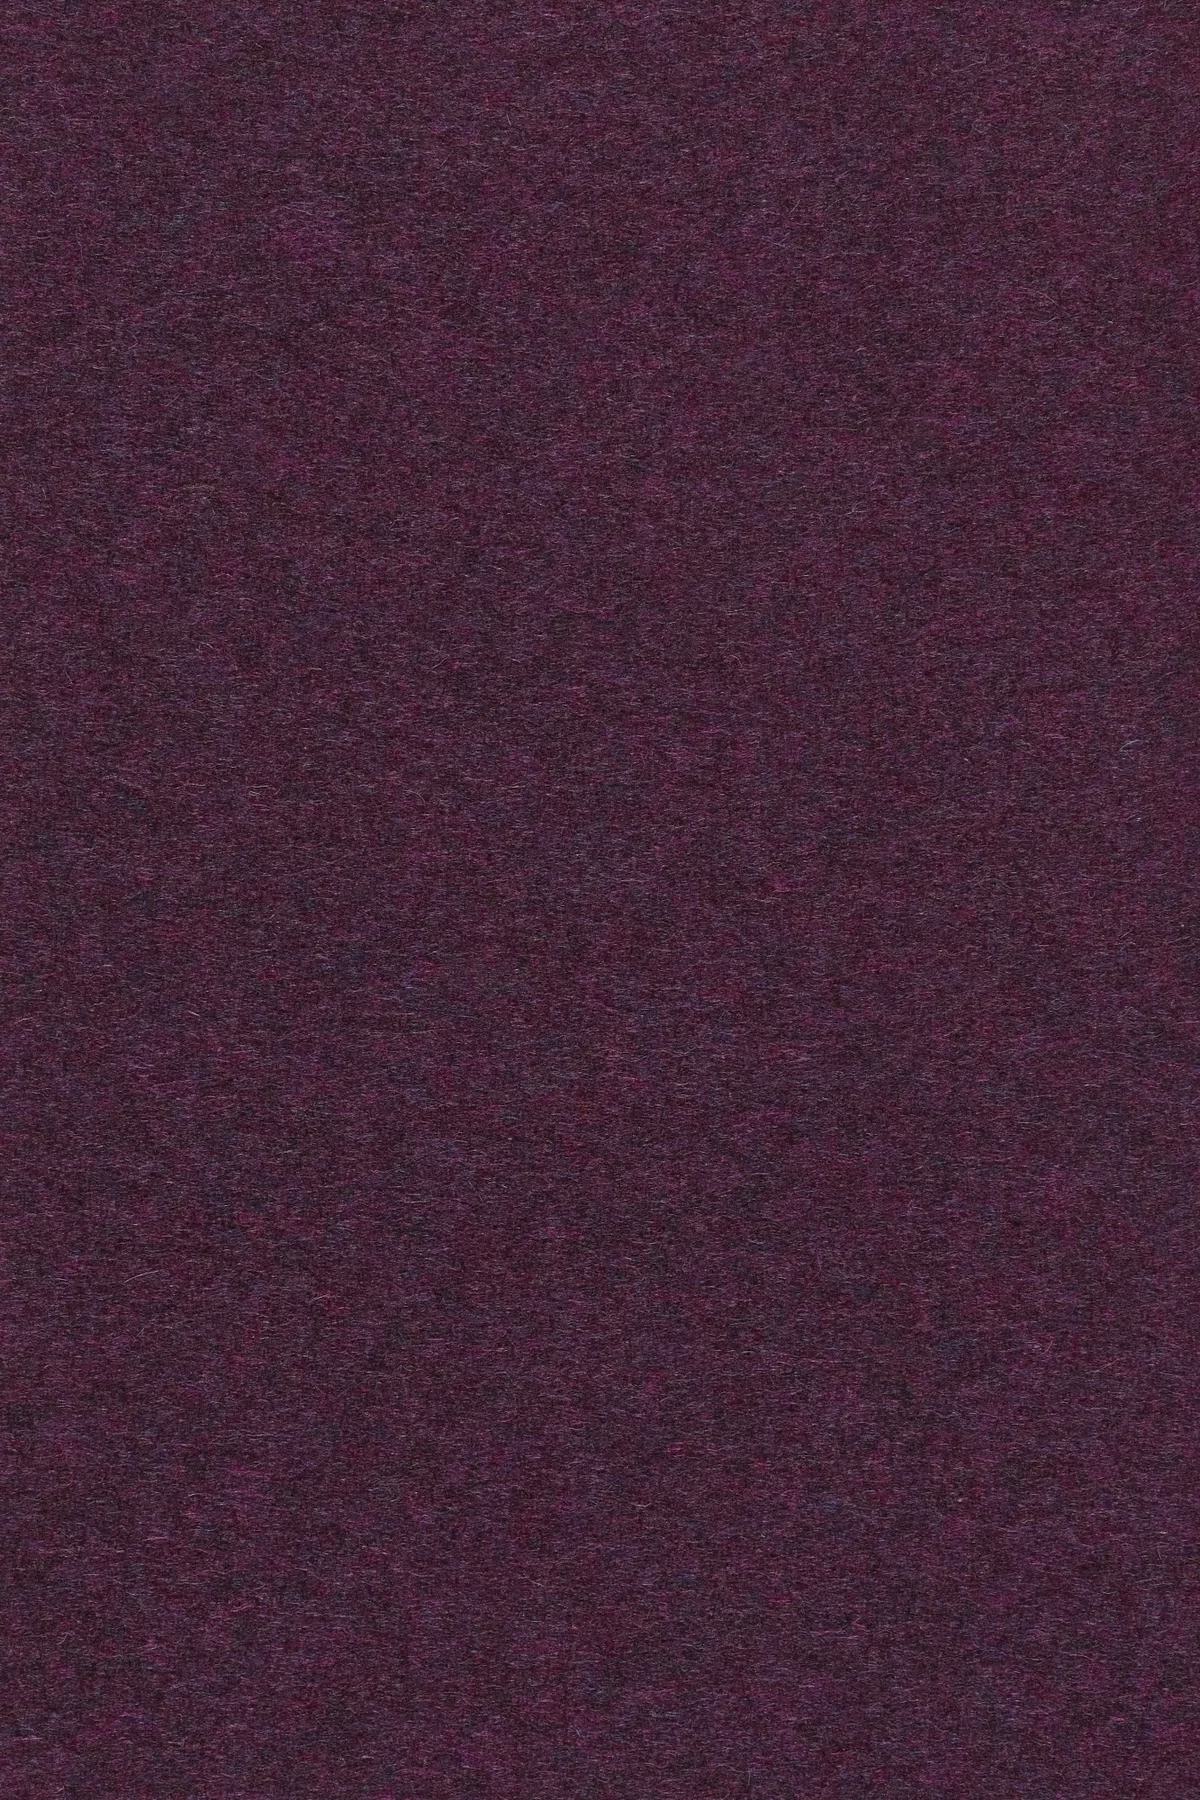 Fabric sample Divina MD 683 purple